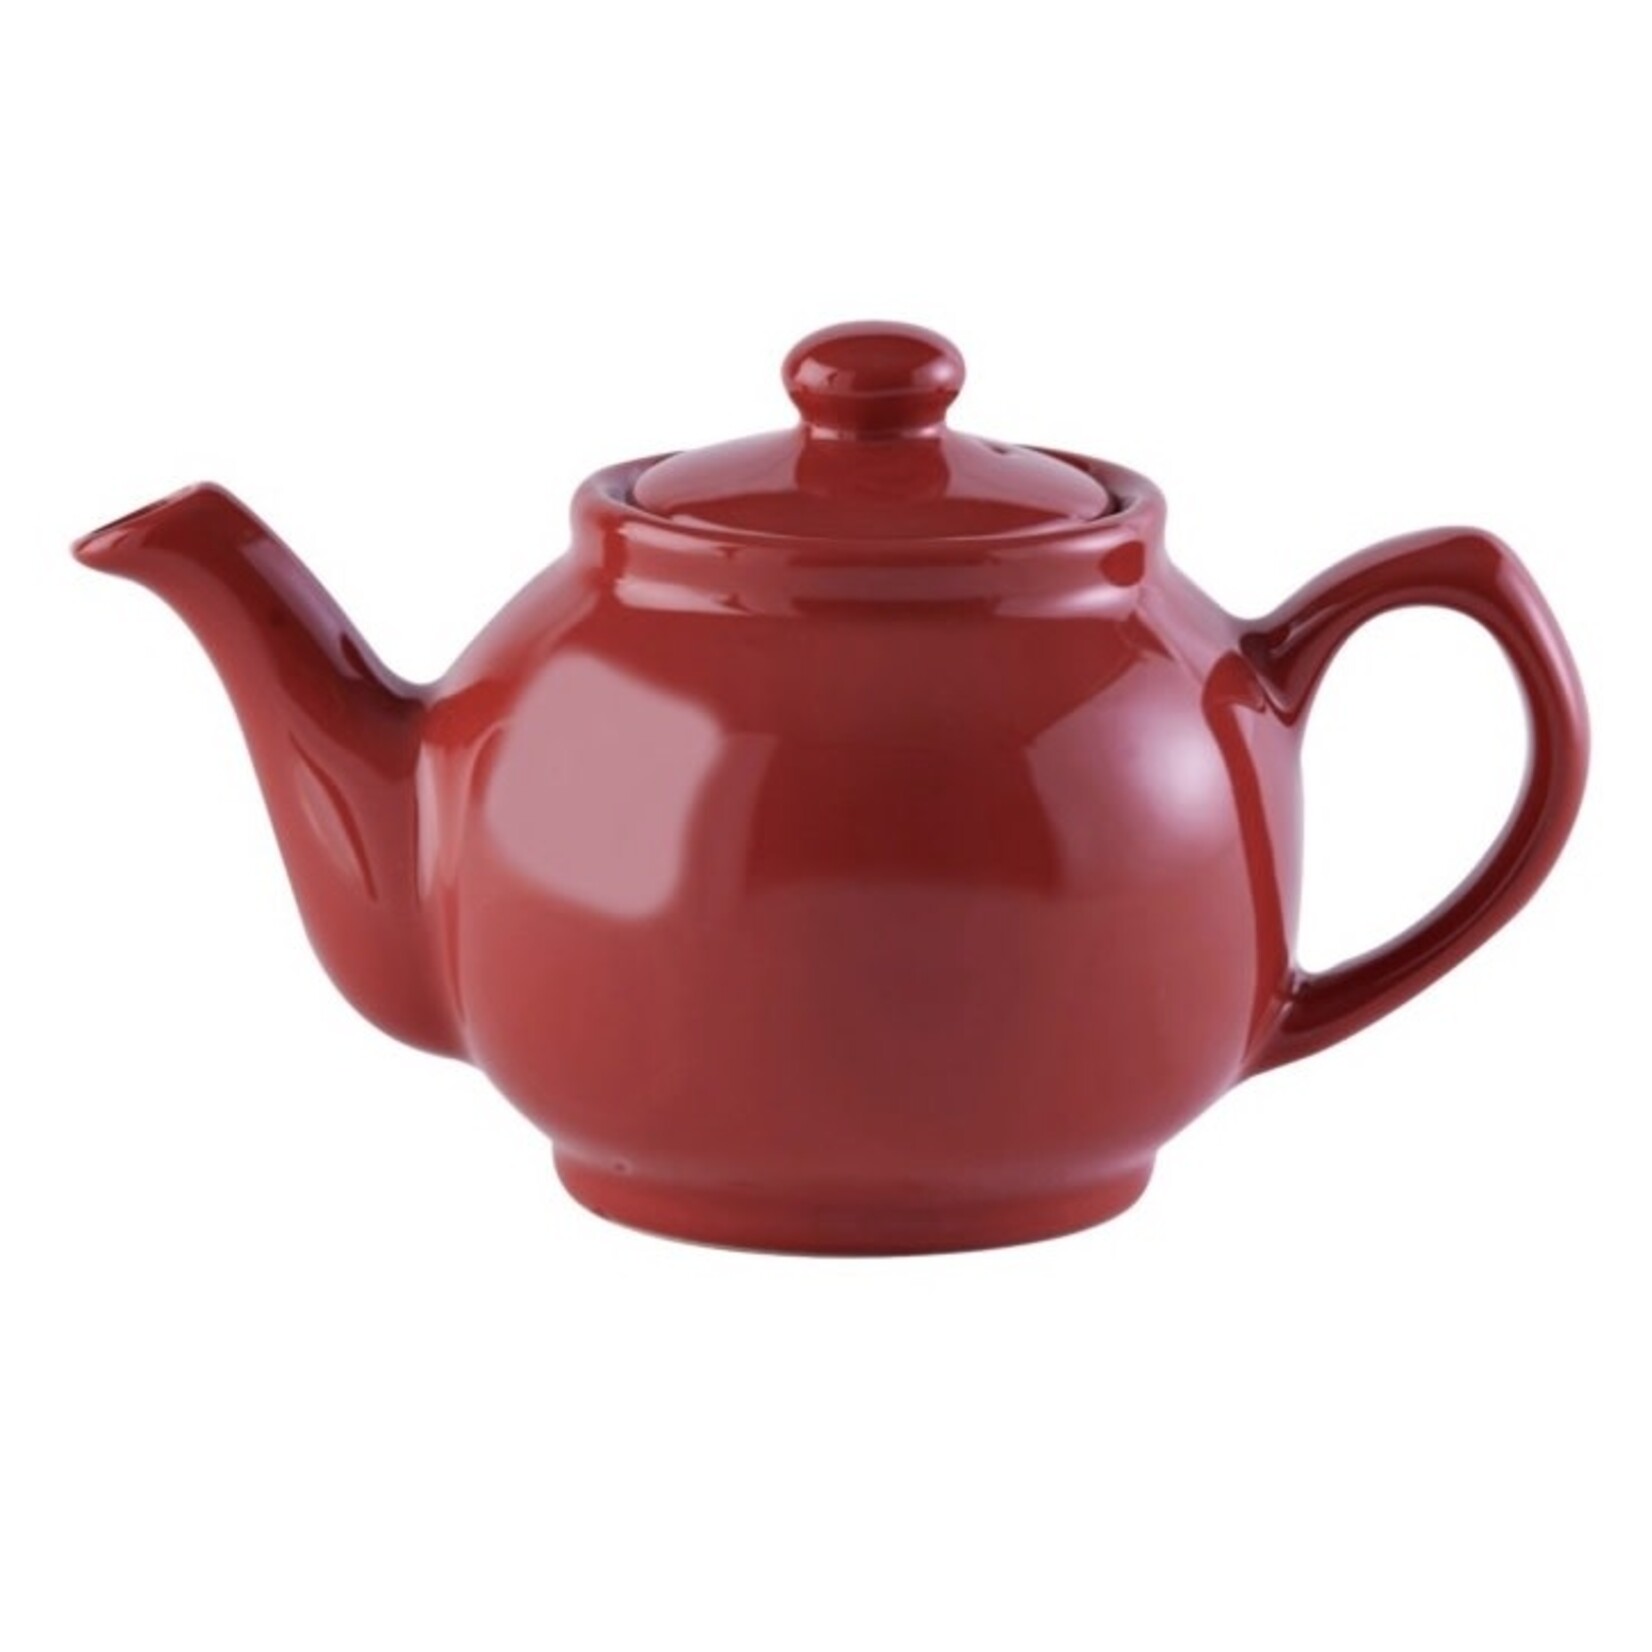 PRICE & KENSINGTON PRICE & KENSINGTON Brights Teapot 2 Cup Red